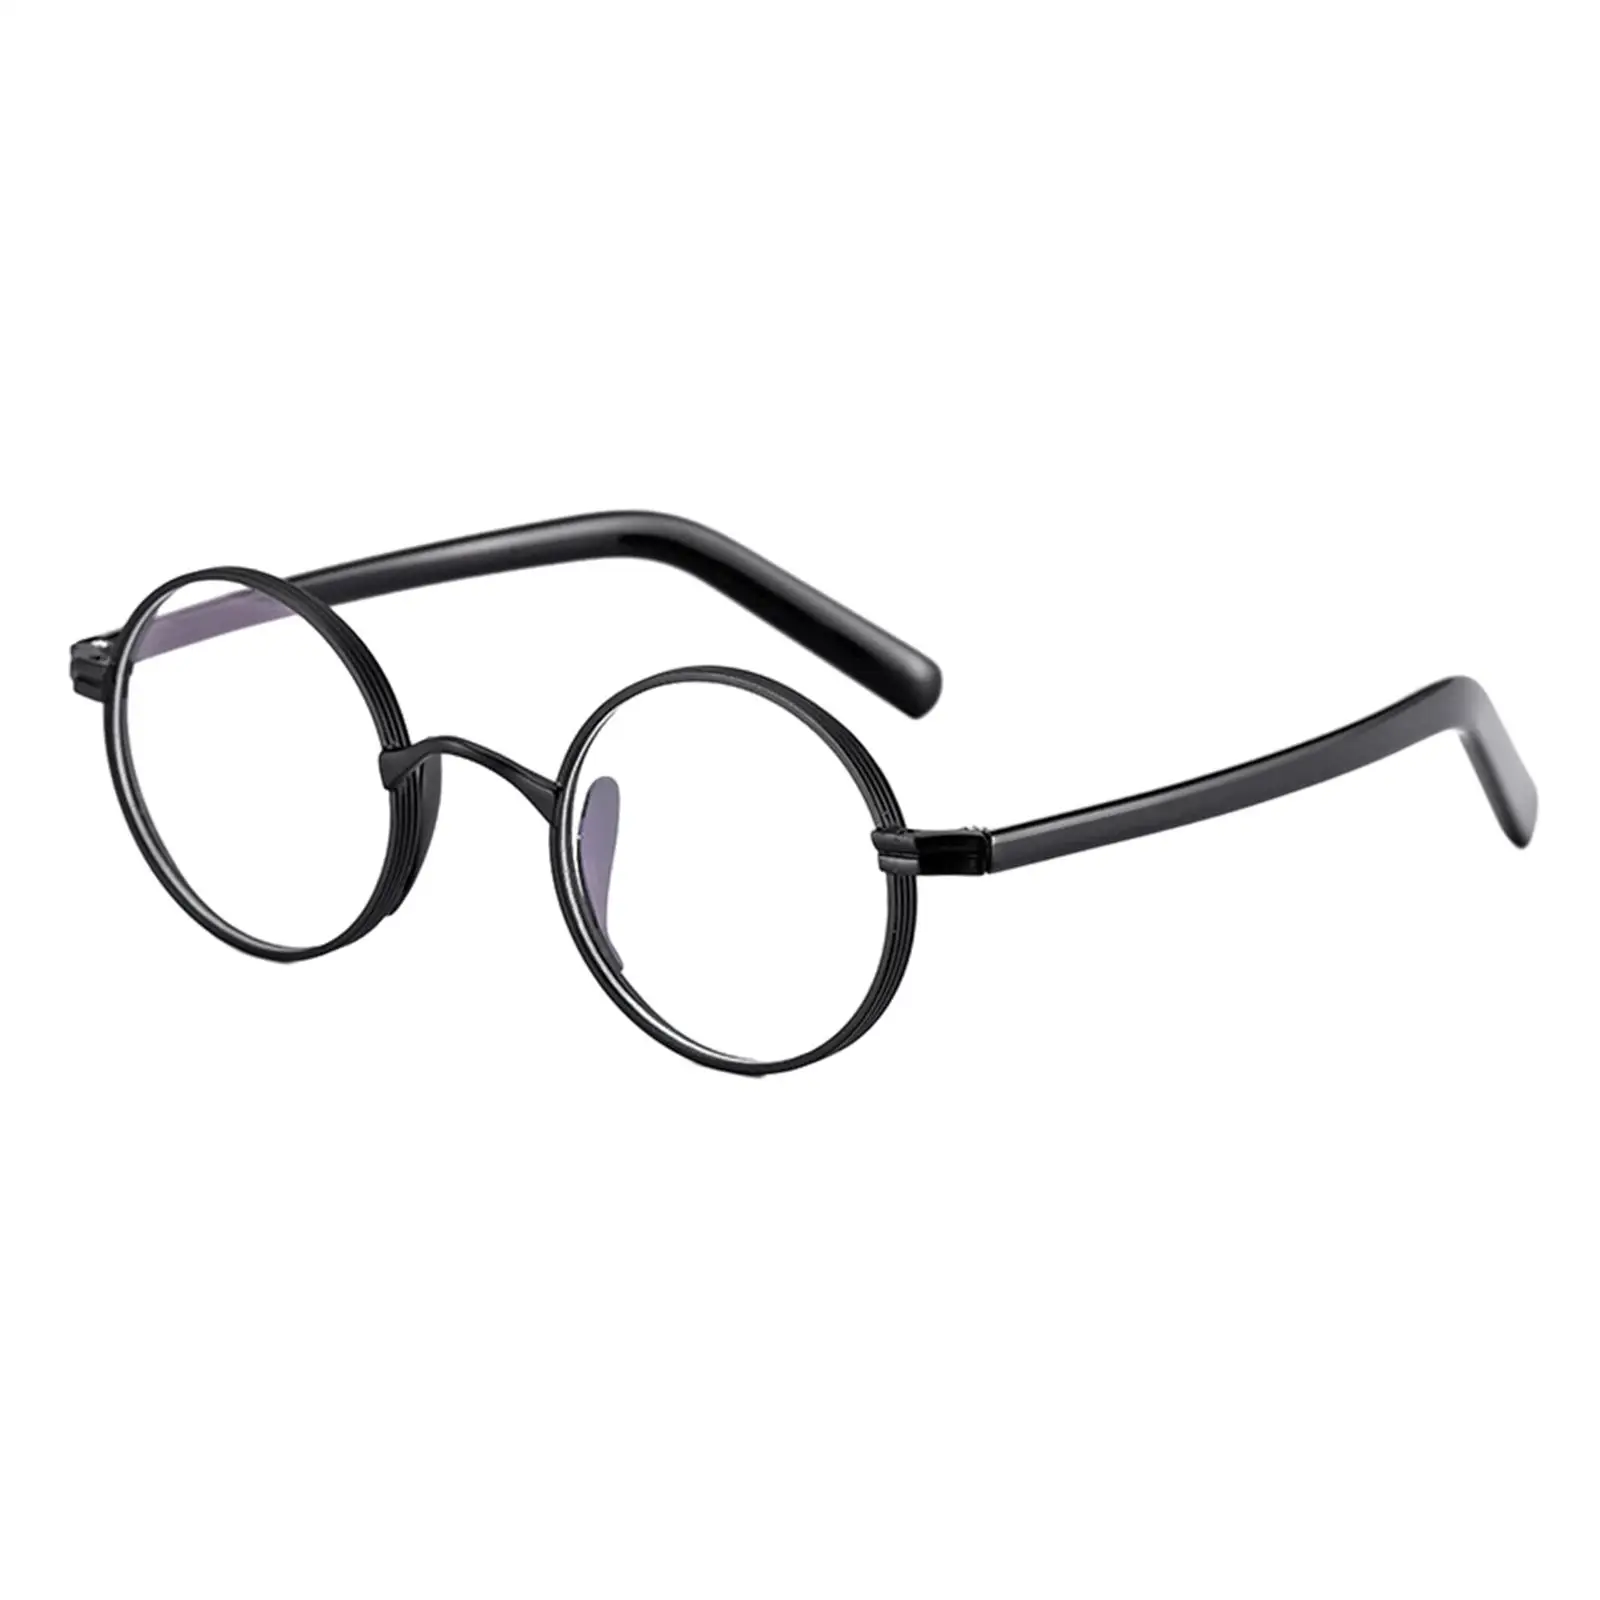 Glasses Frames Titanium Alloy Oval Oversized Retro for Men Women Comfortable to Wear Ultralight Eyeglasses Frames Eyewear Frames